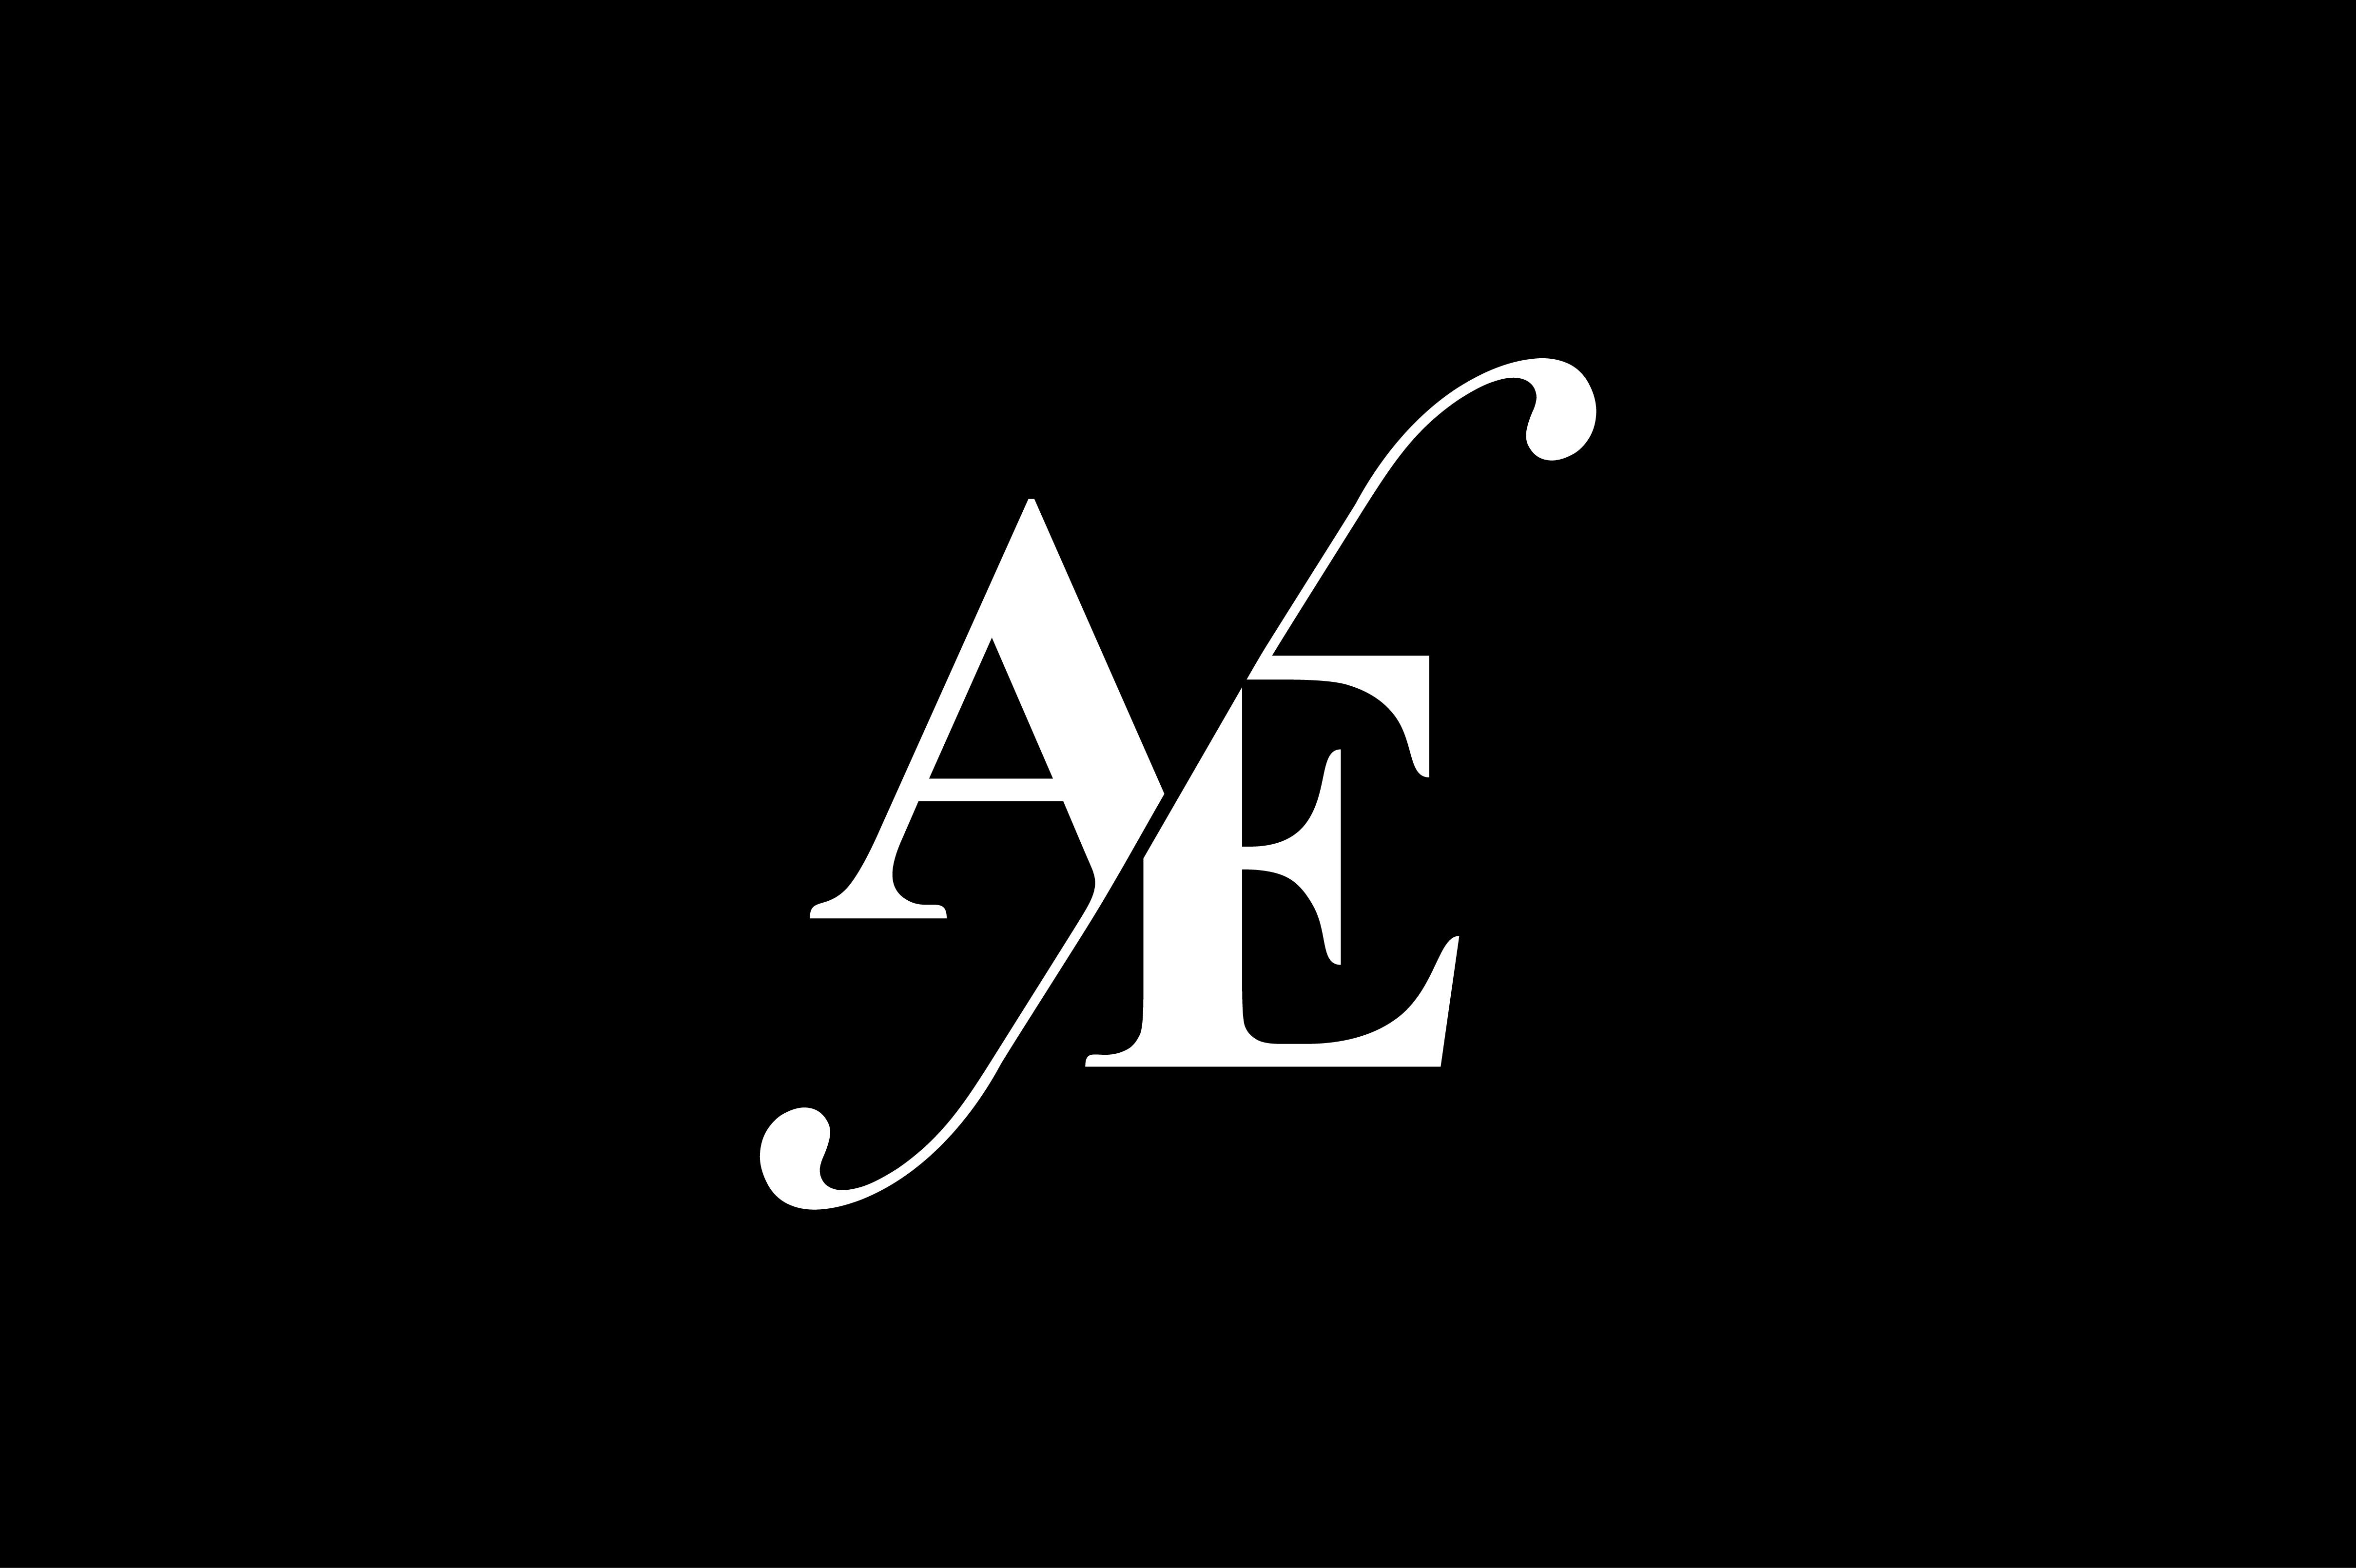 AE Monogram Logo design By Vectorseller TheHungryJPEG com